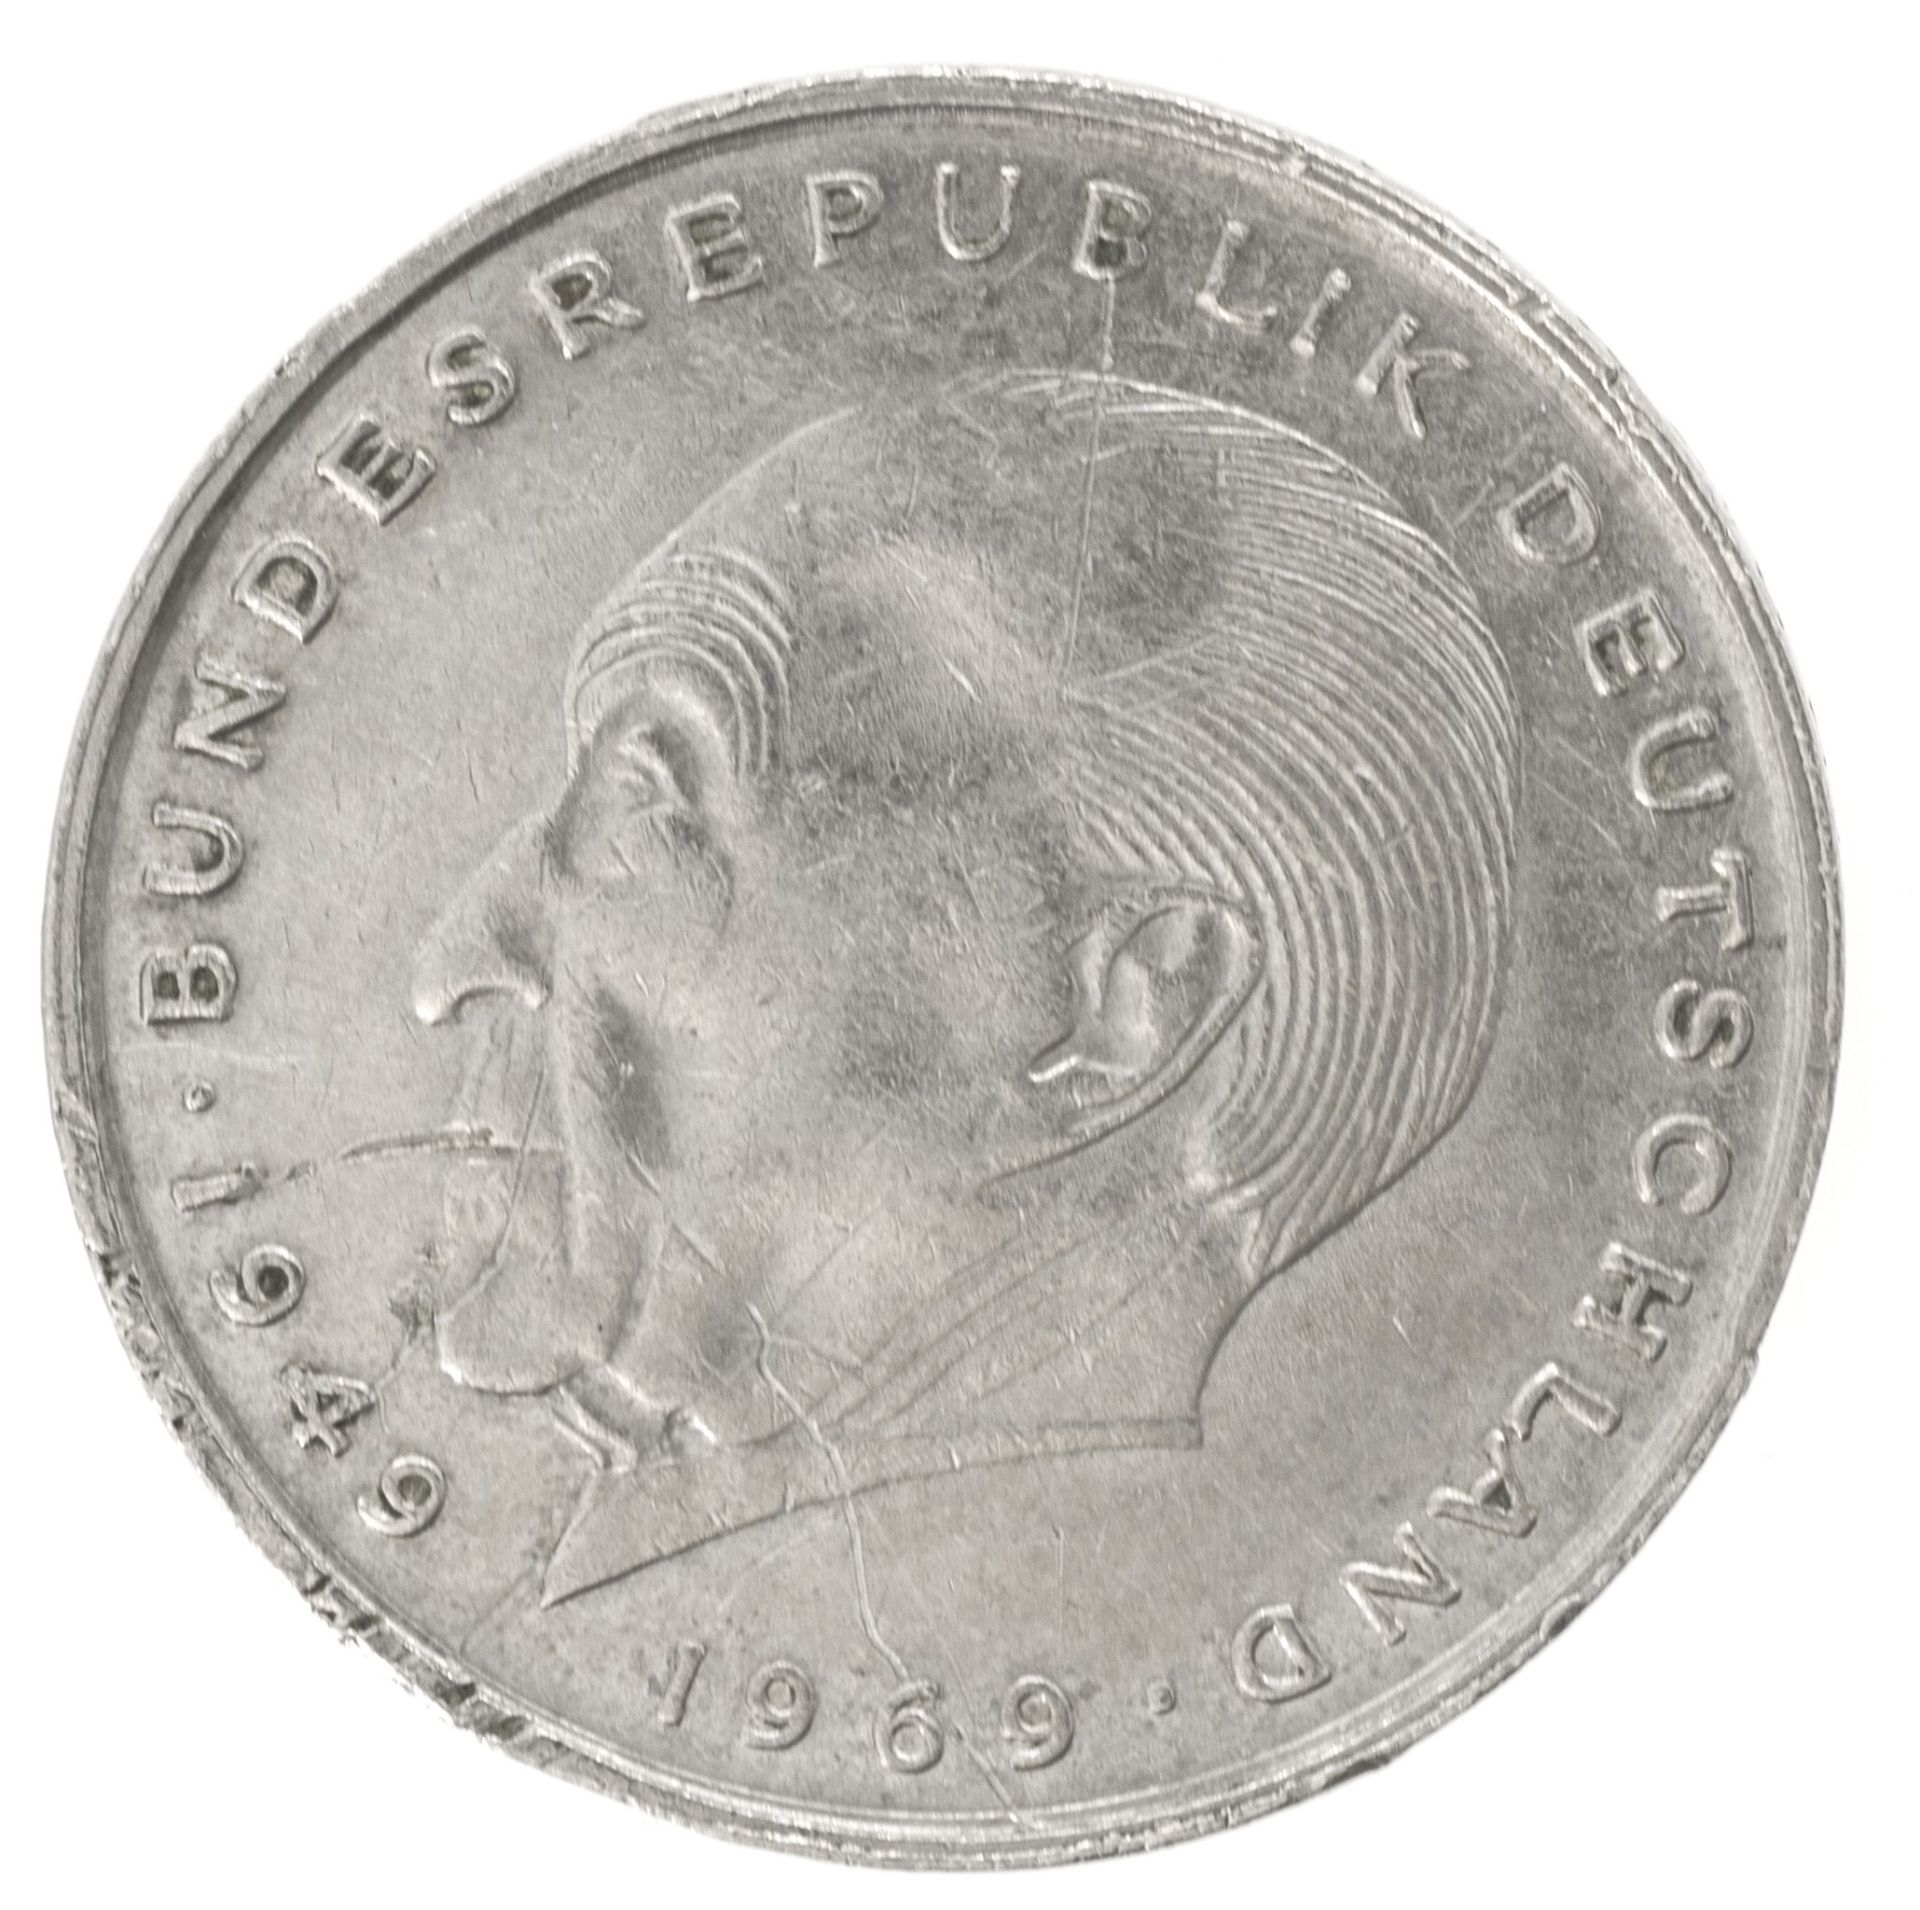 BRD 1969 D, 2.- DM - Münze, Fehlprägung: Schrötling zu groß, Durchmesser: ca. 27,16 mm. - Bild 2 aus 3